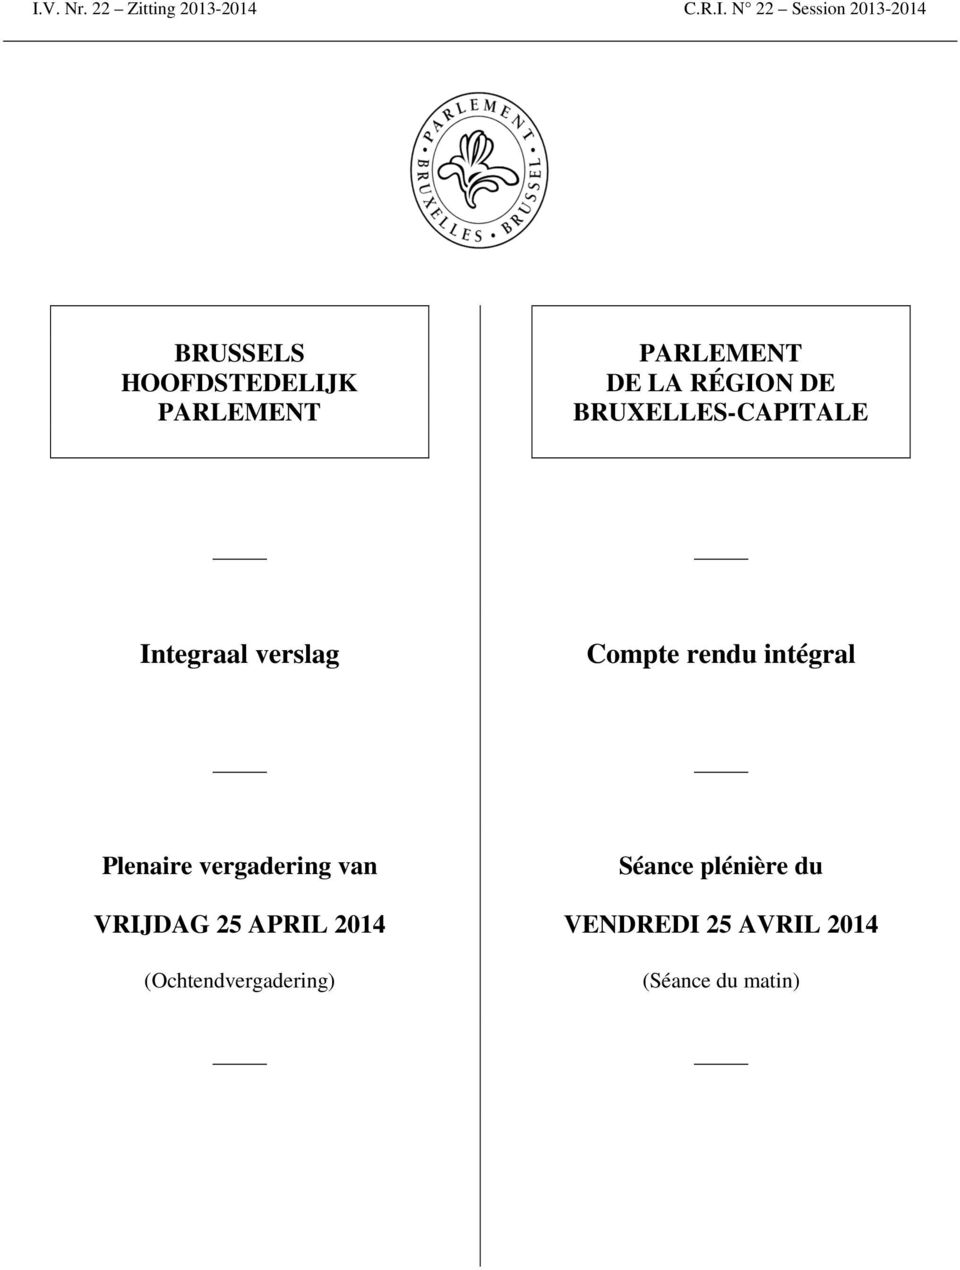 BRUXELLES-CAPITALE Integraal verslag Compte rendu intégral Plenaire